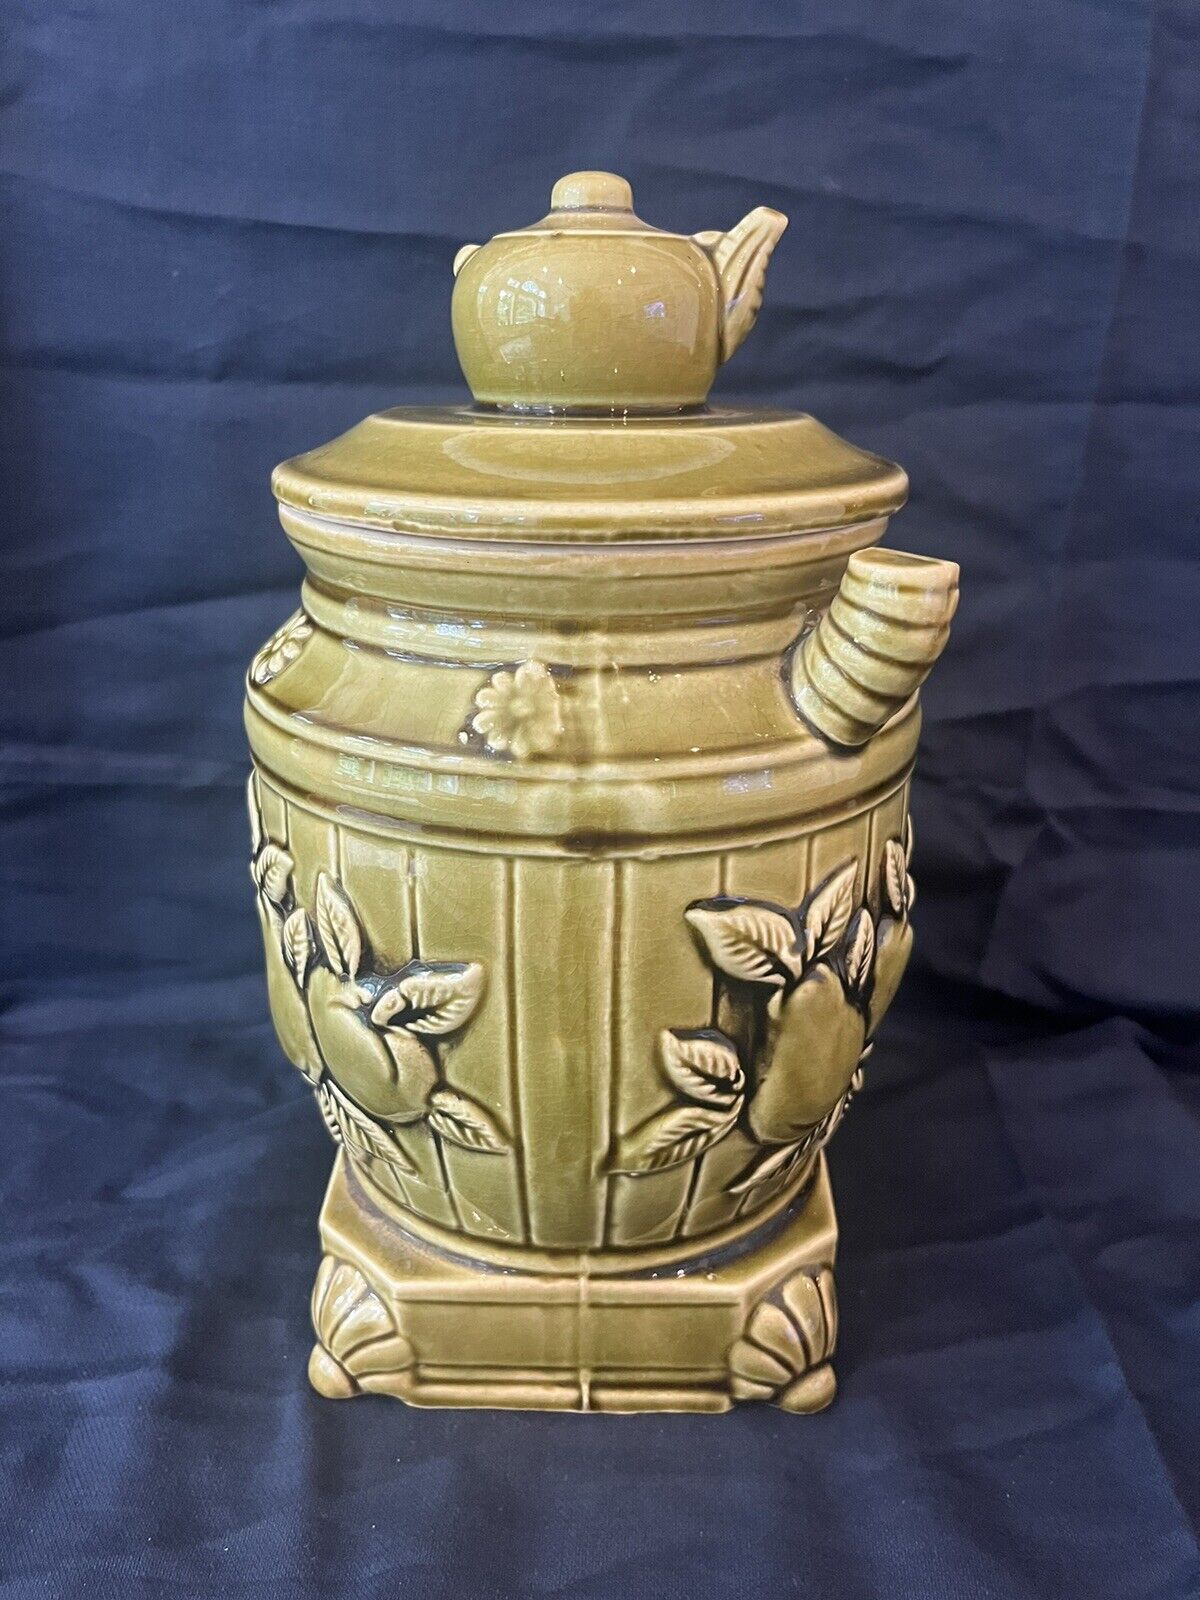 Vintage Enesco Cookie Jar Ceramic Pot Belly Stove Teapot